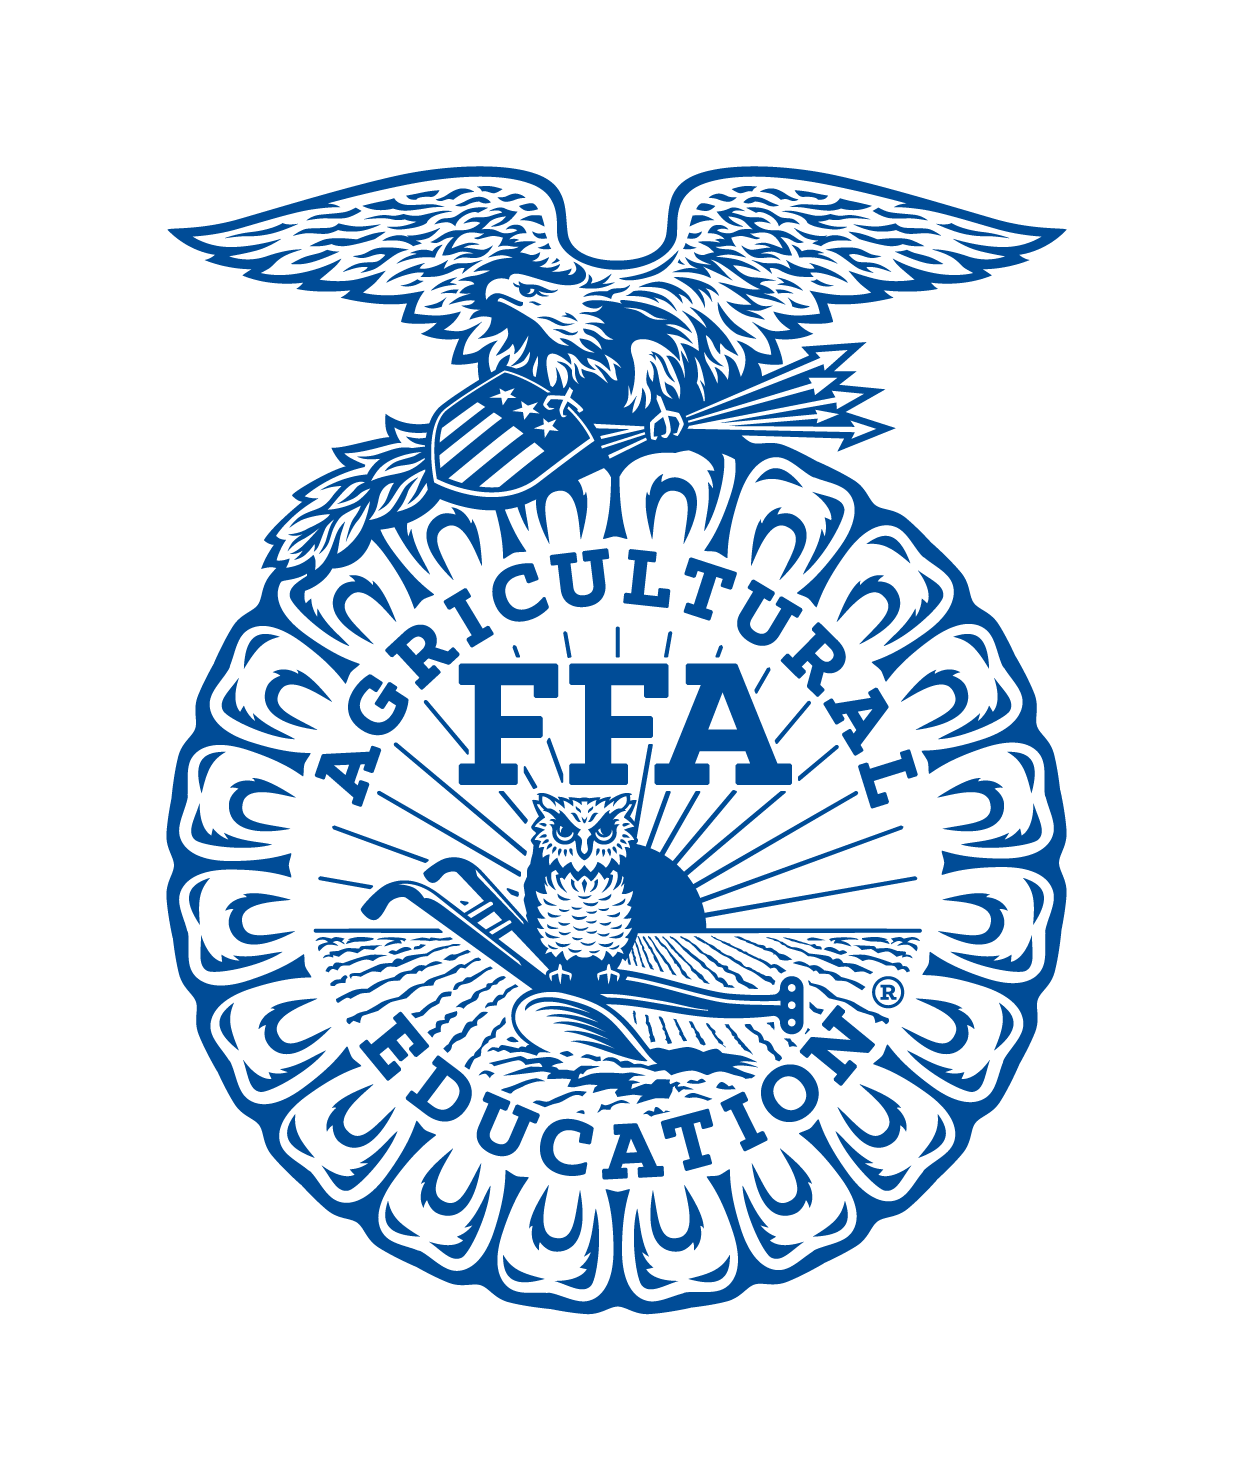 National FFA Emblem